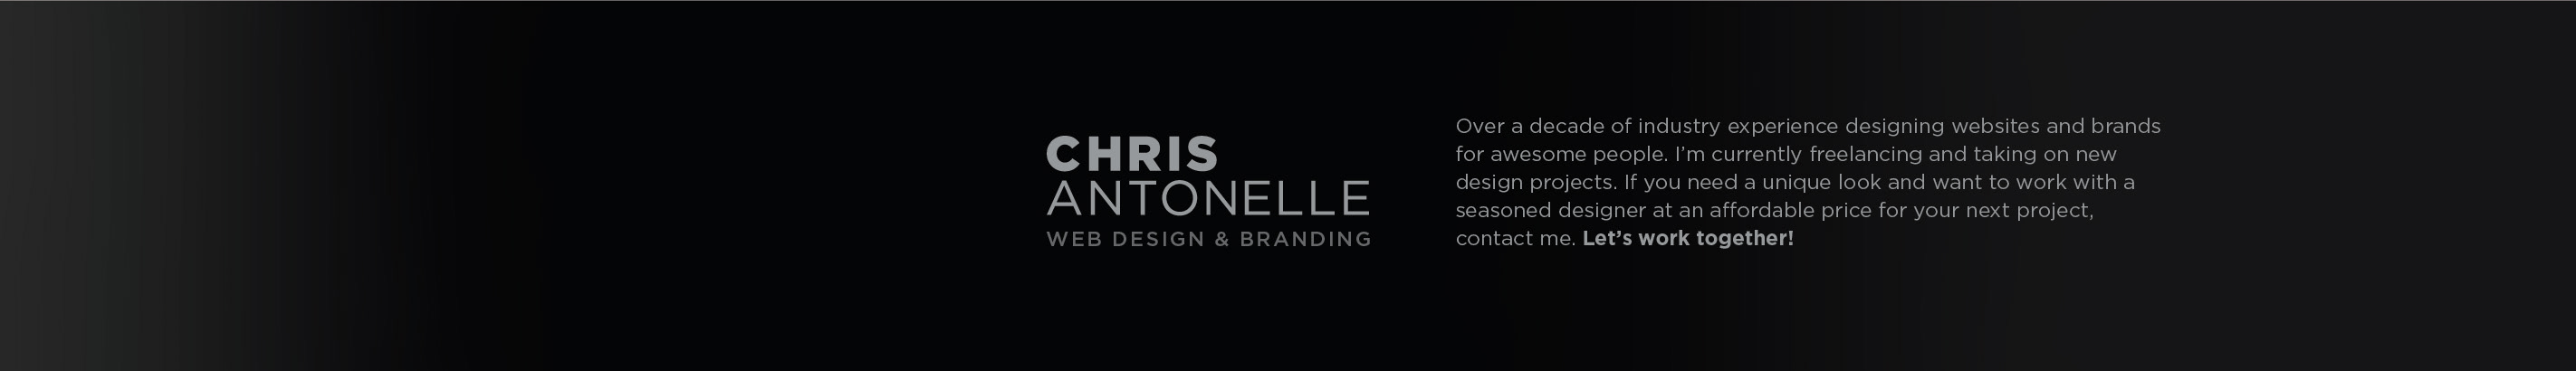 Chris Antonelle's profile banner